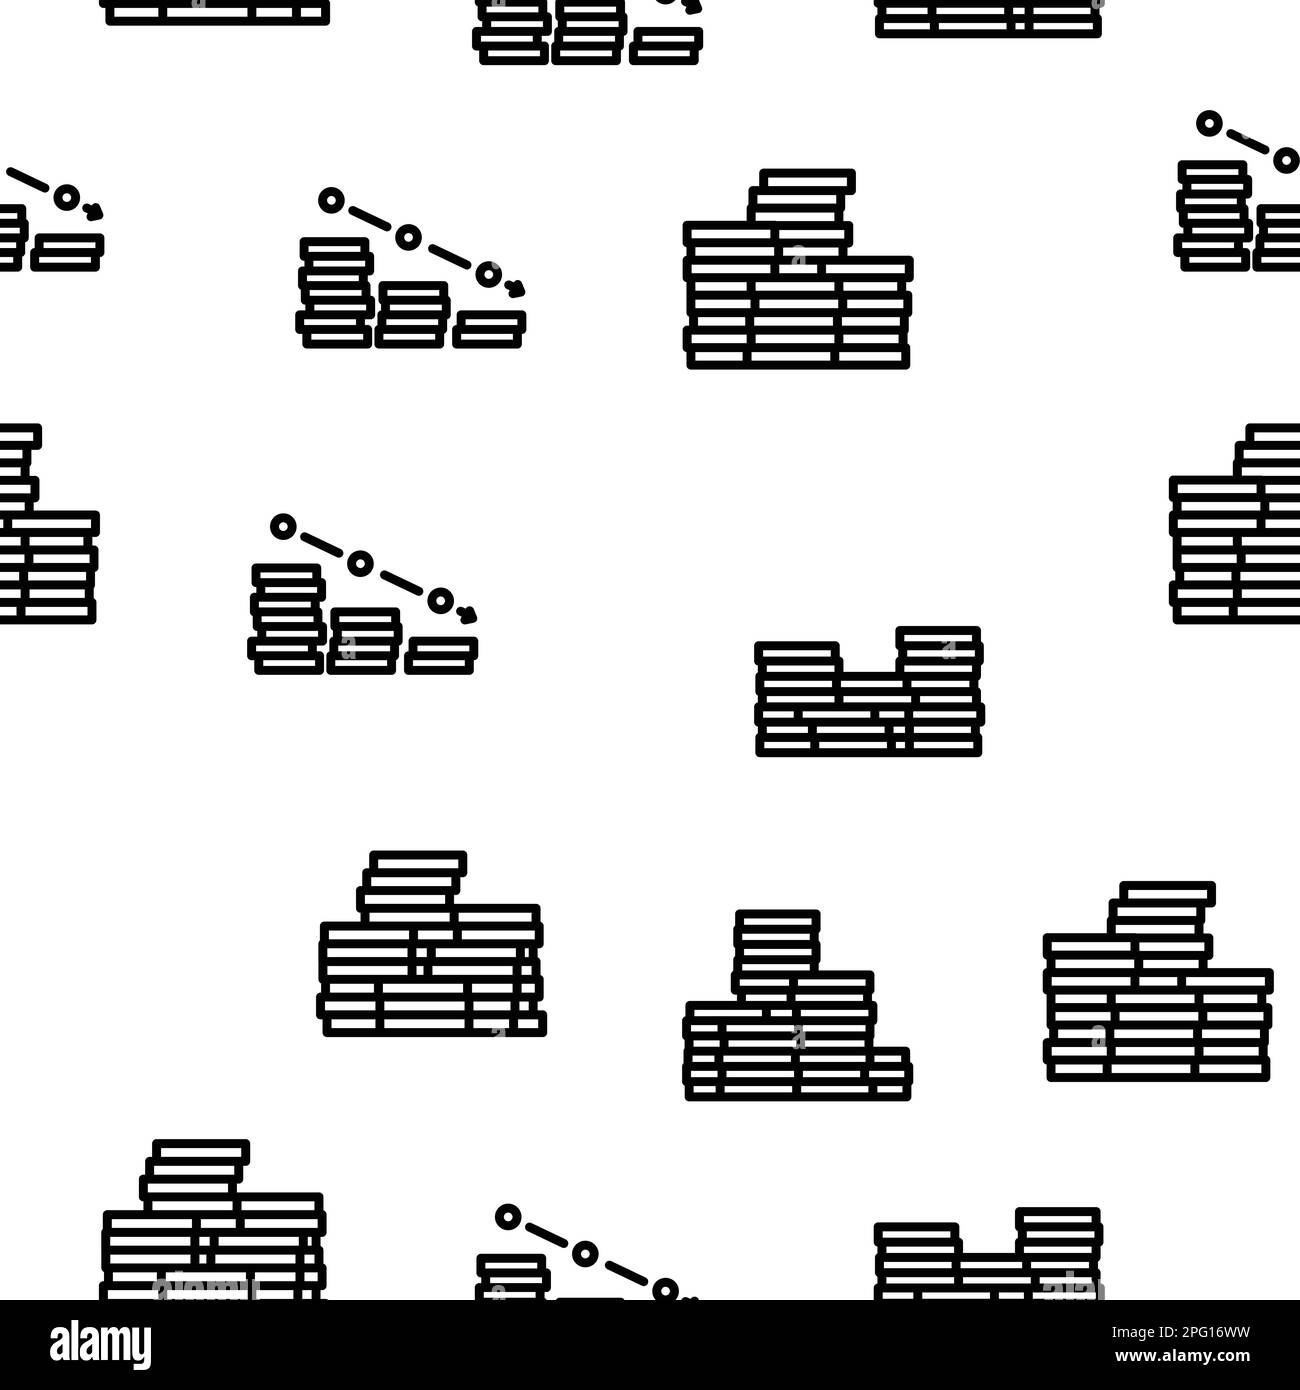 coin money business vector seamless pattern Stock Vector